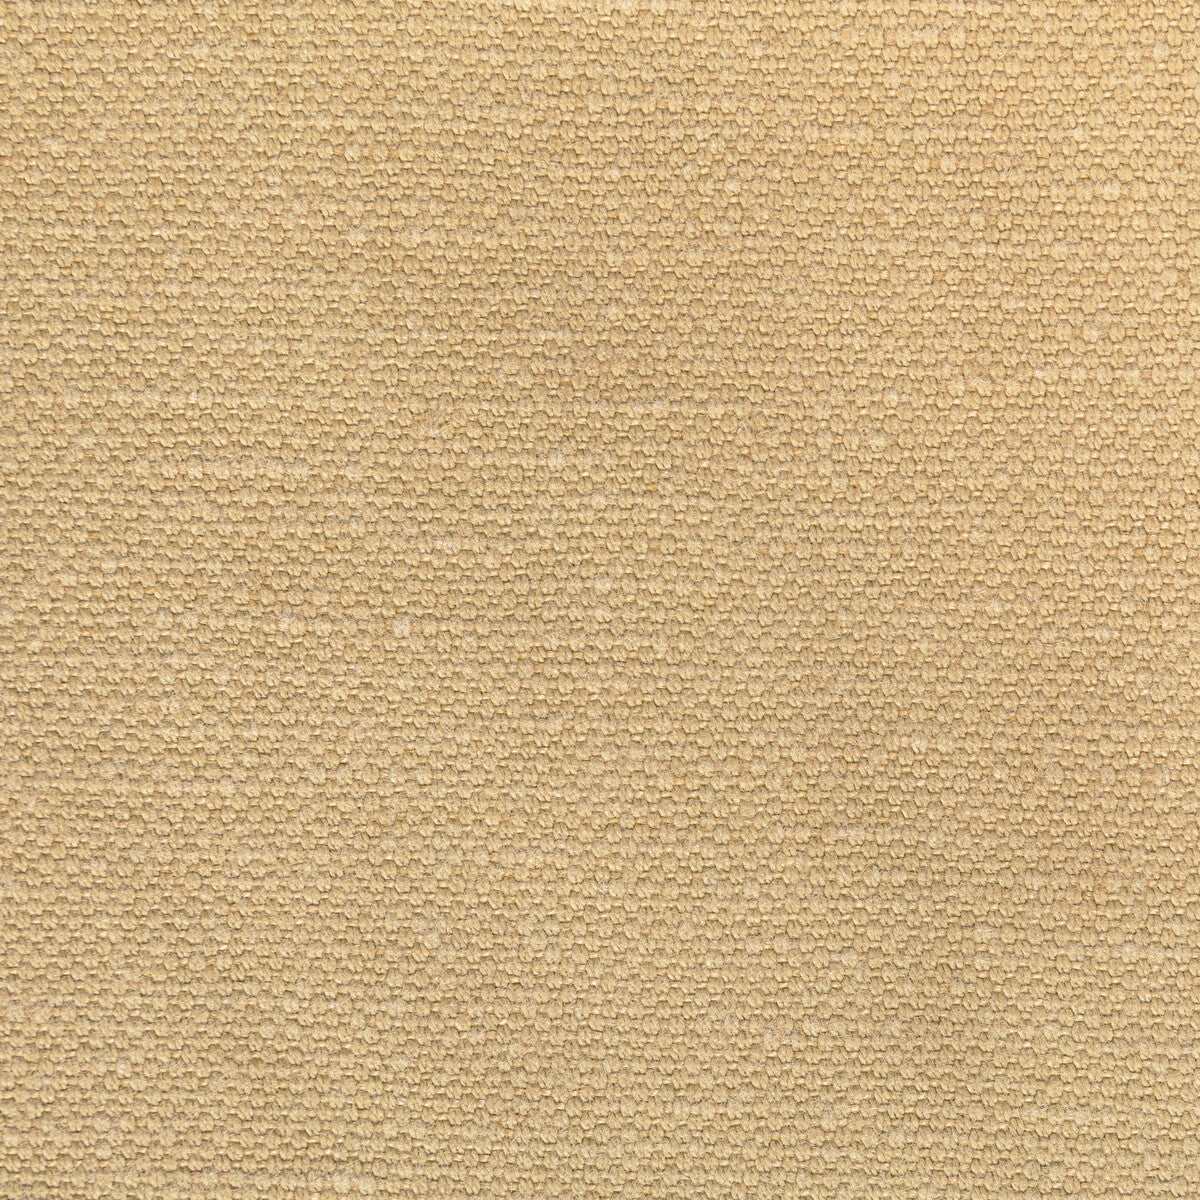 Carson fabric in caramel color - pattern 36282.416.0 - by Kravet Basics